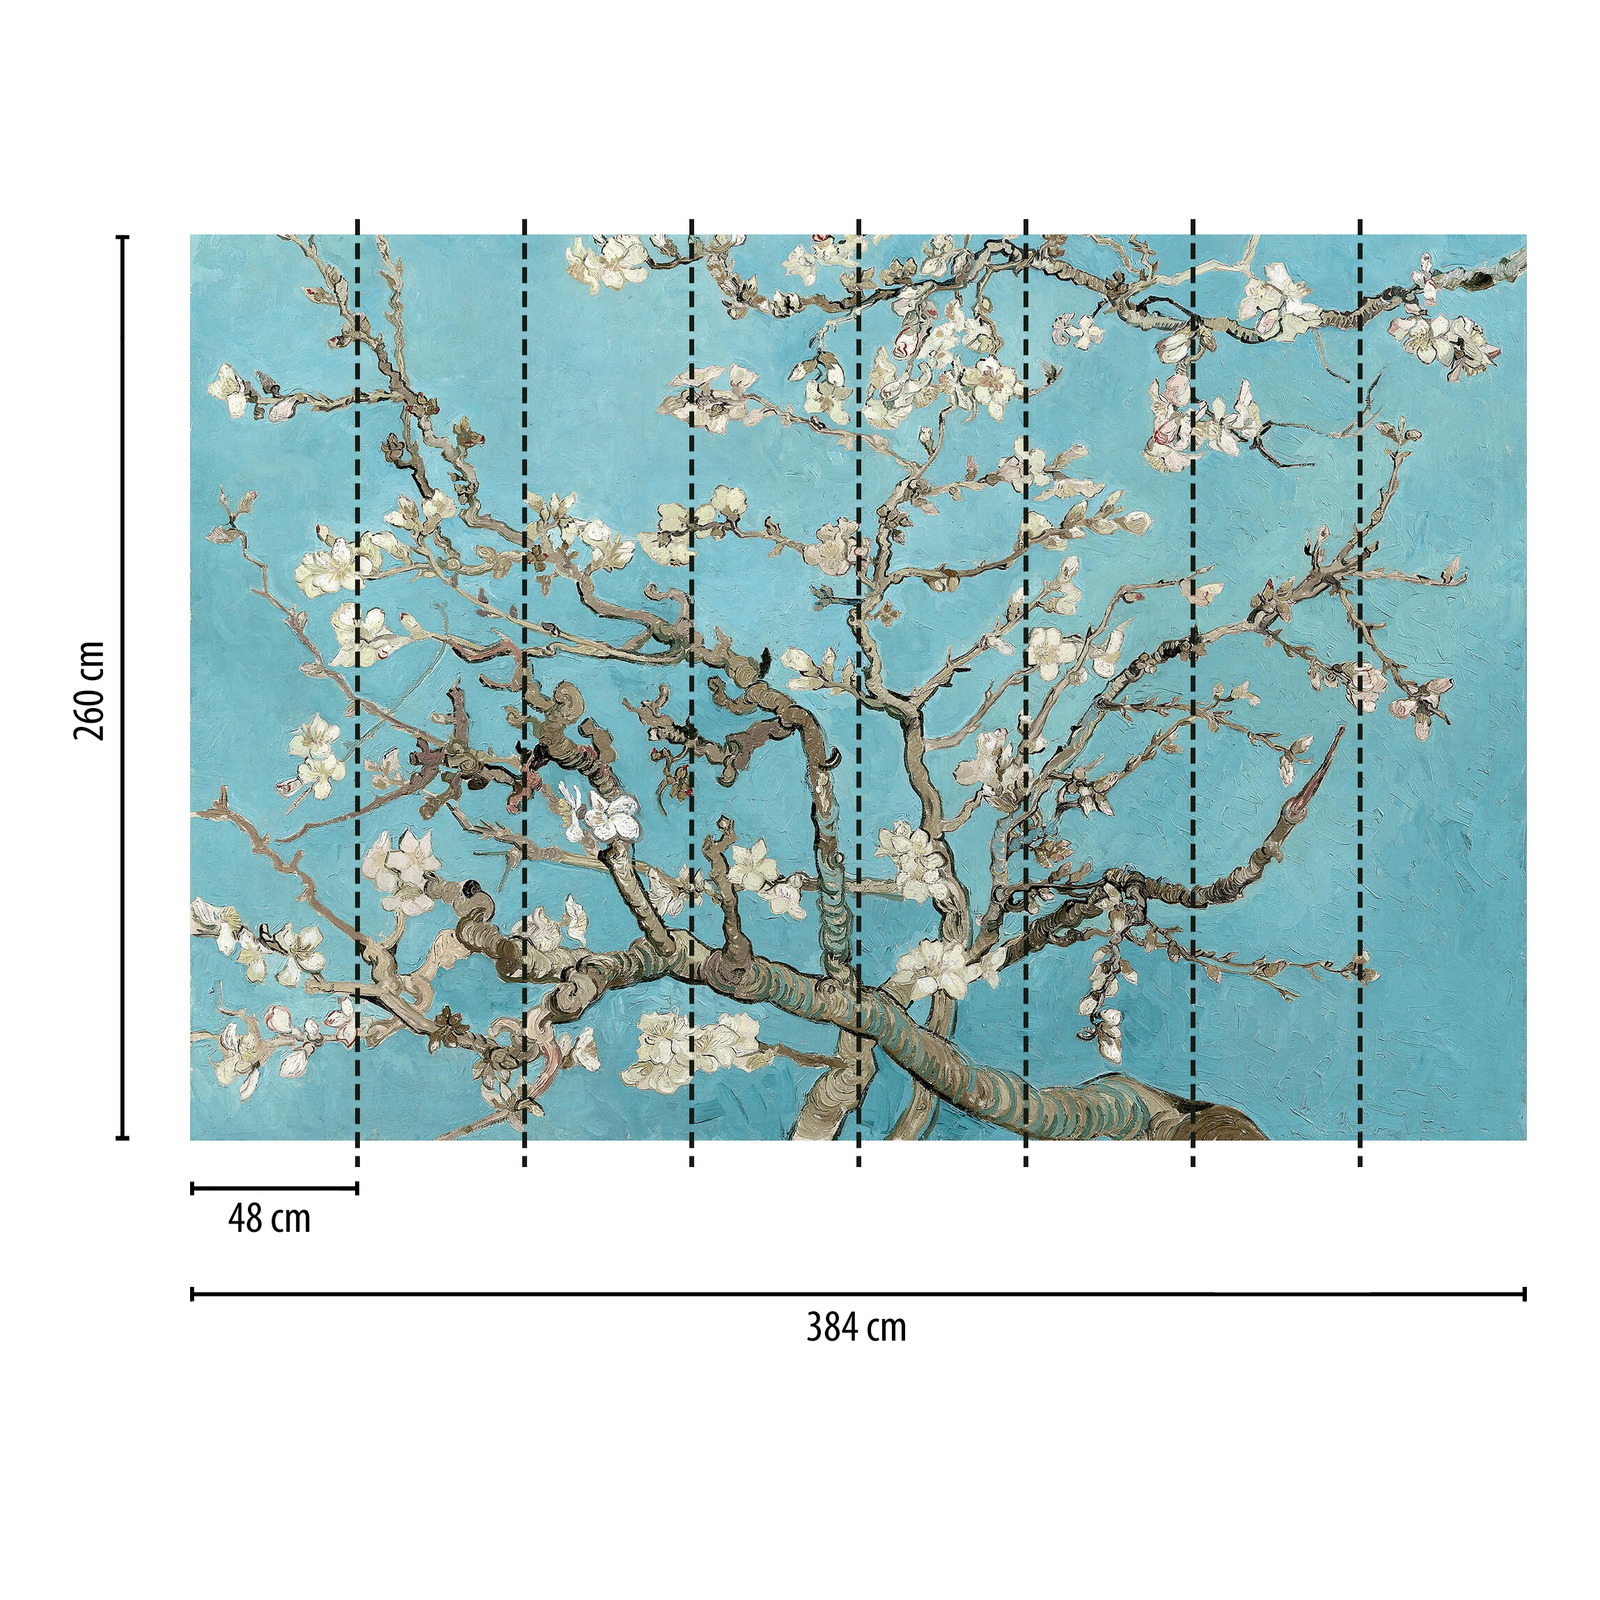             Photo wallpaper almond blossoms - blue, brown, white
        